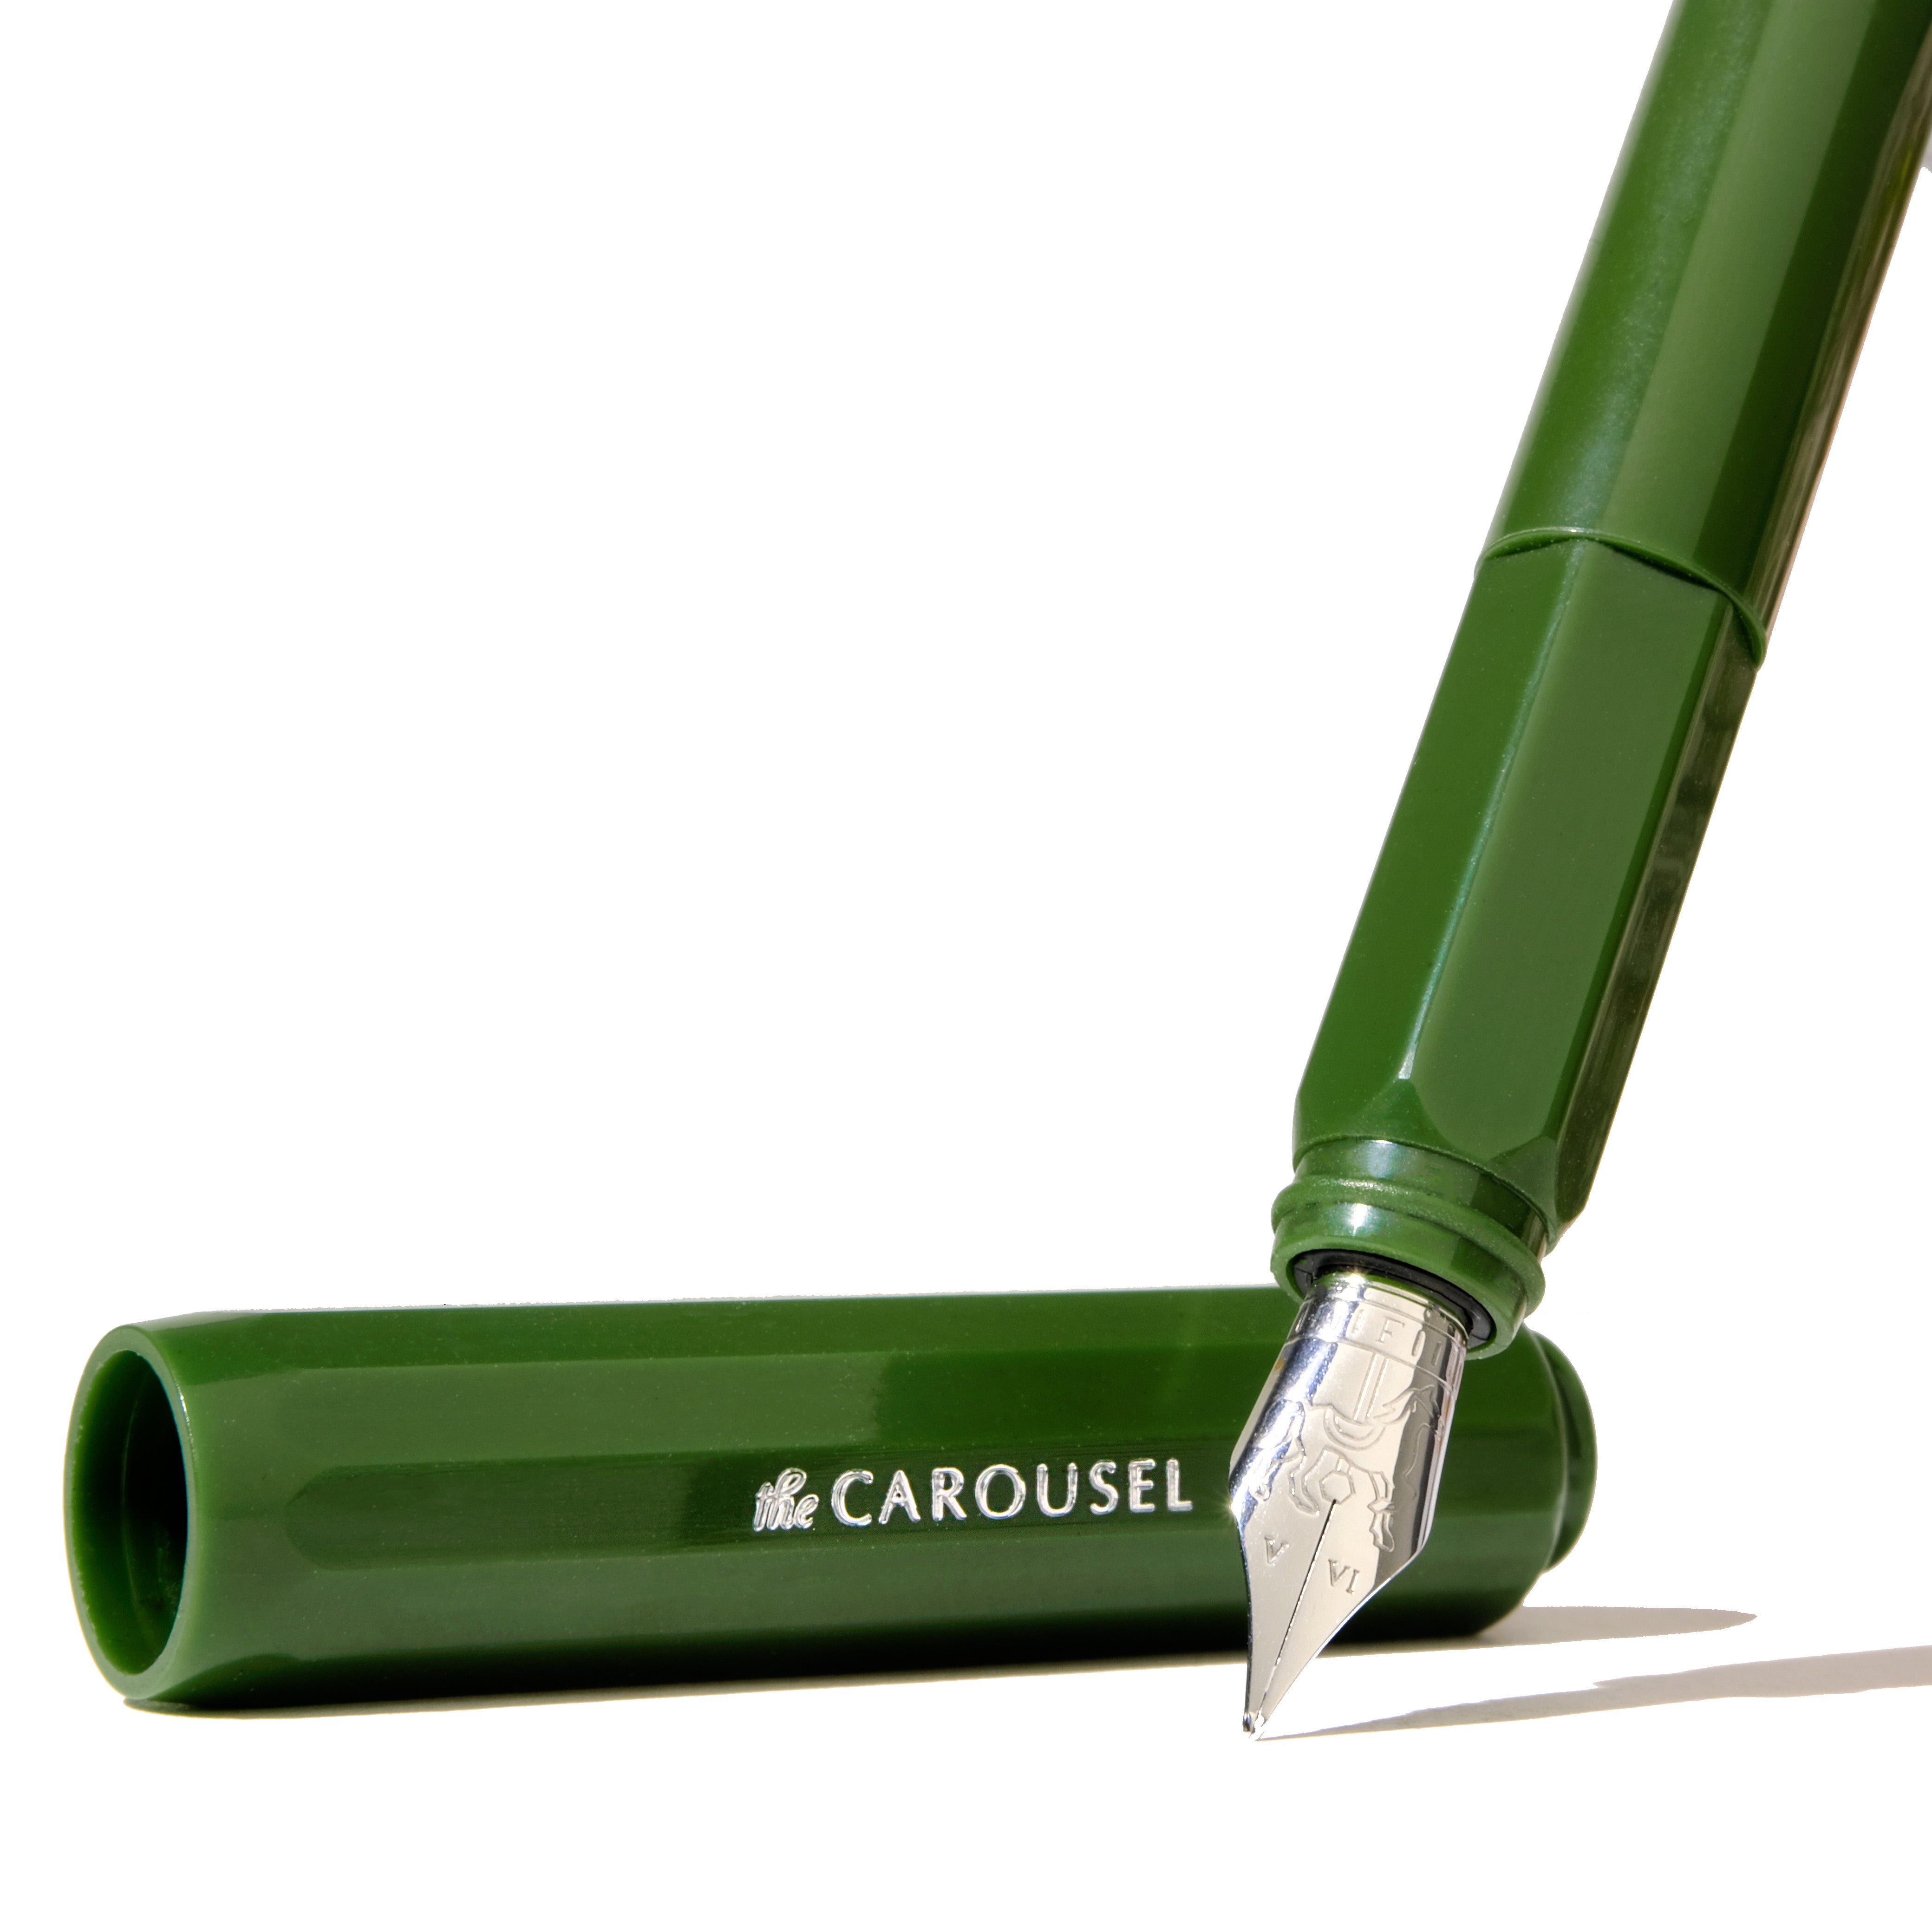 Limited Edition - The Carousel Fountain Pen - Brilliant Beanstalk